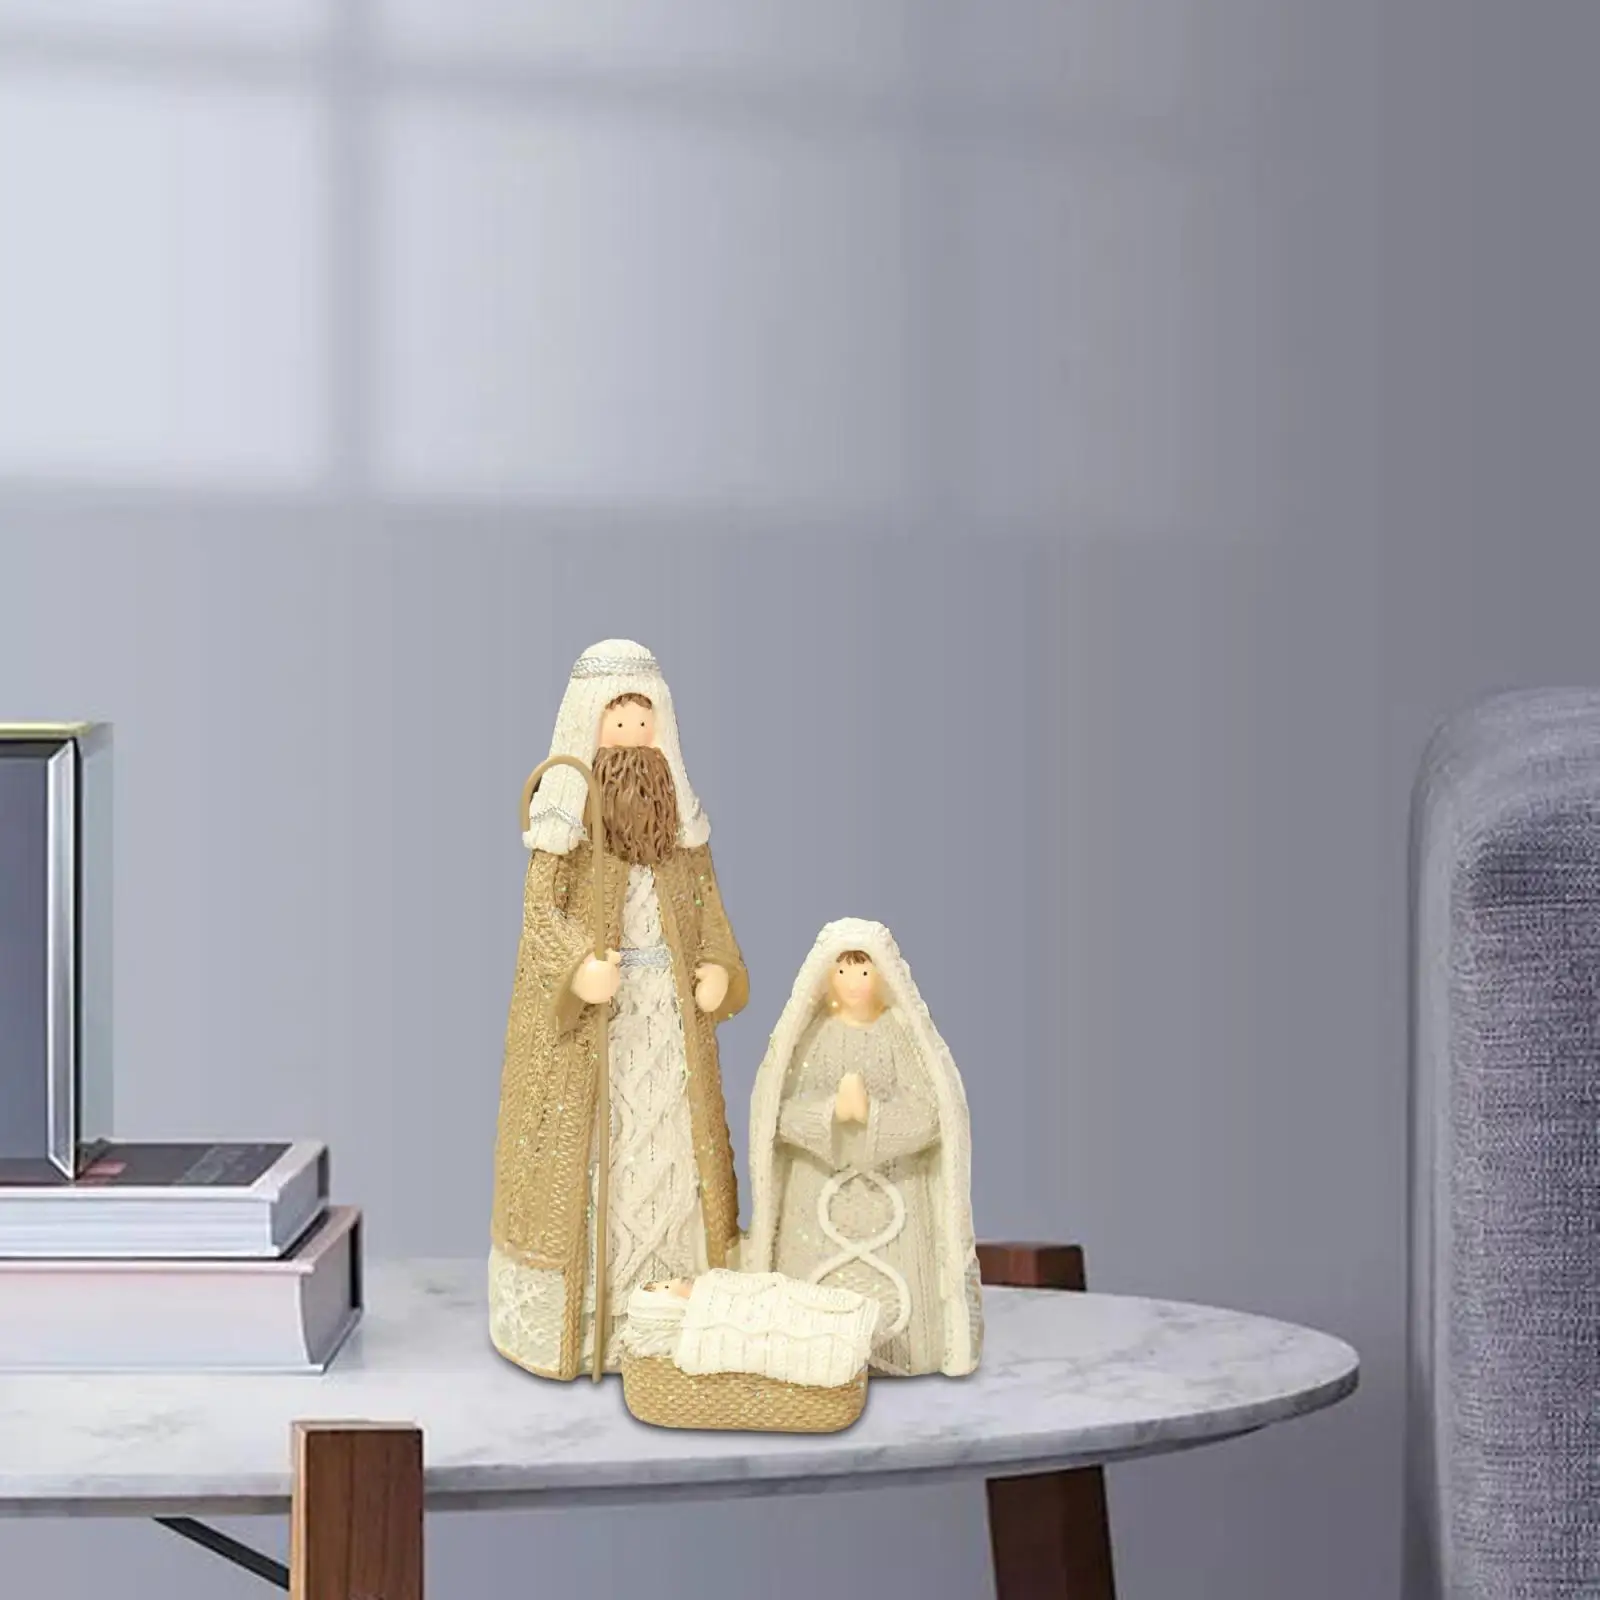 Holy Family Figurine Nativity Scene Crafts Decorative for Fireplace Church Desktop Decor